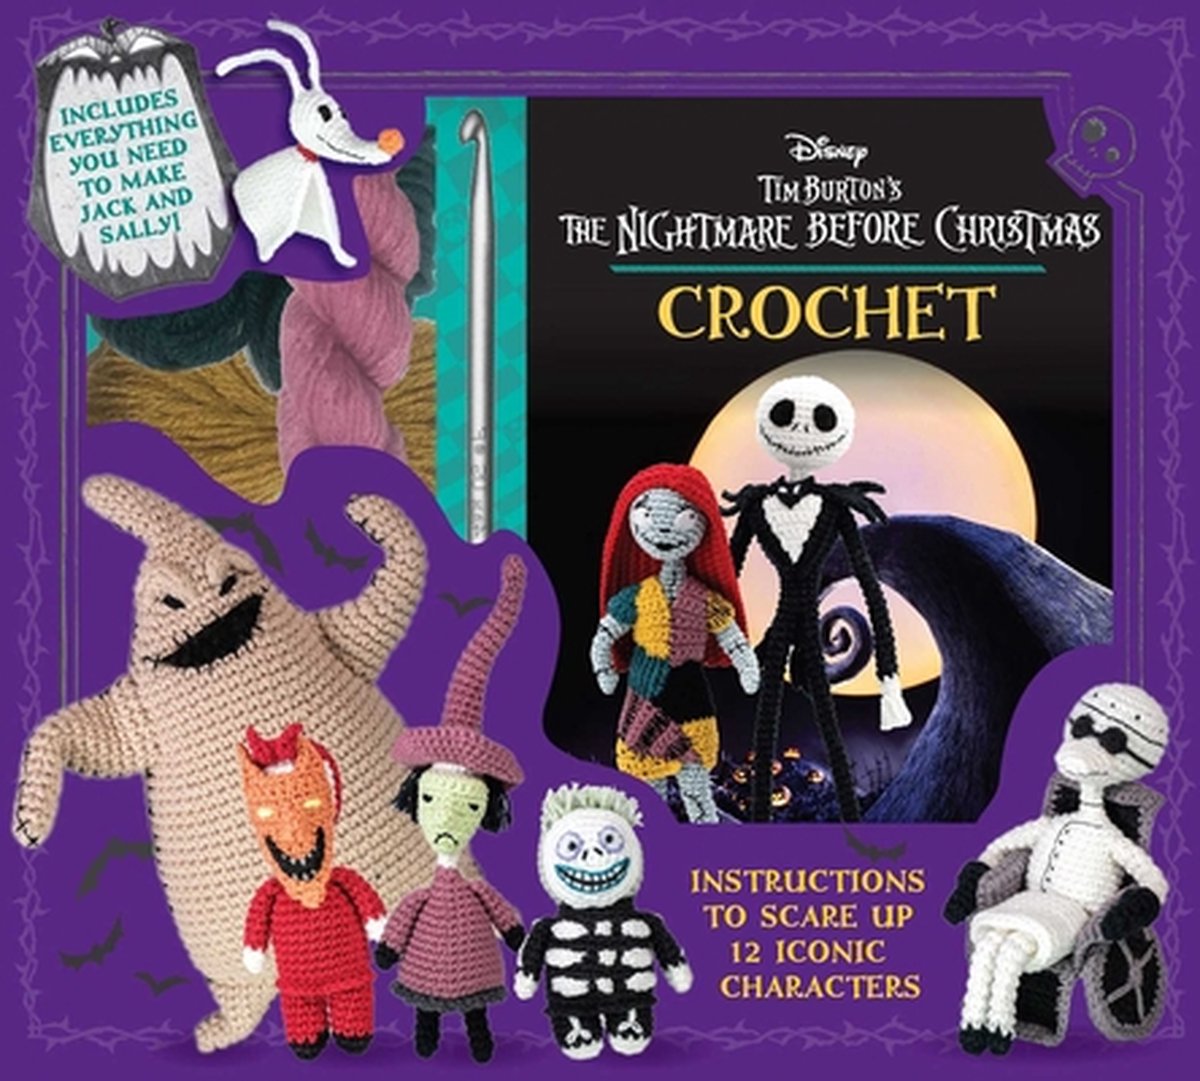 Disney Tim Burton's: The Nightmare Before Christmas Crochet - 